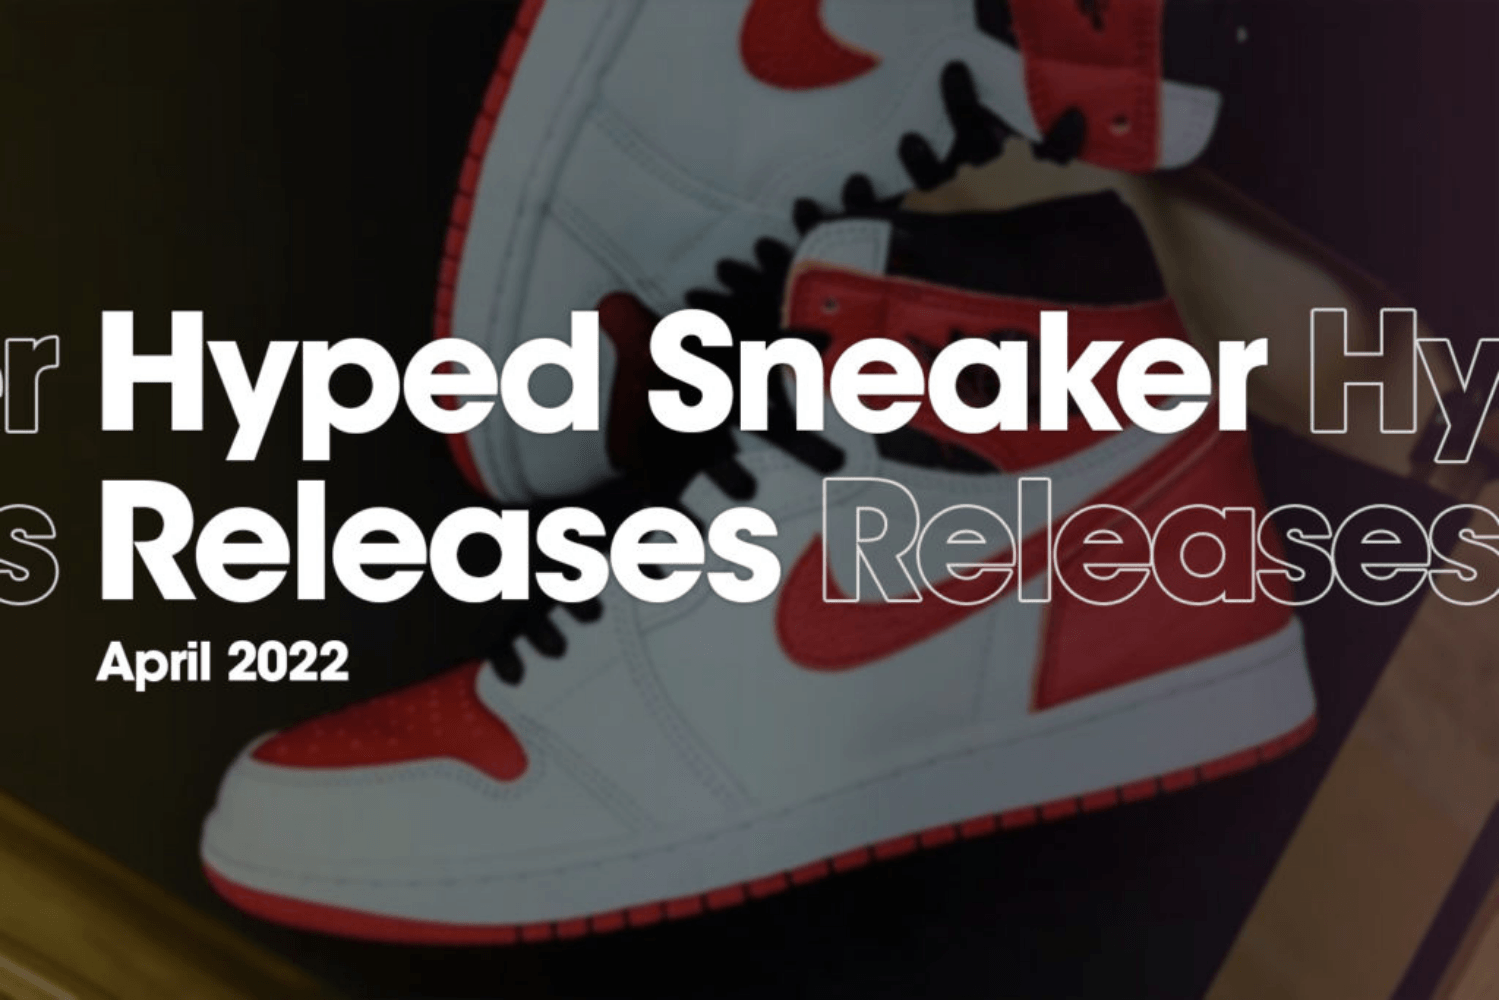 Die Hyped Sneaker Releases von April 2022 im Überblick